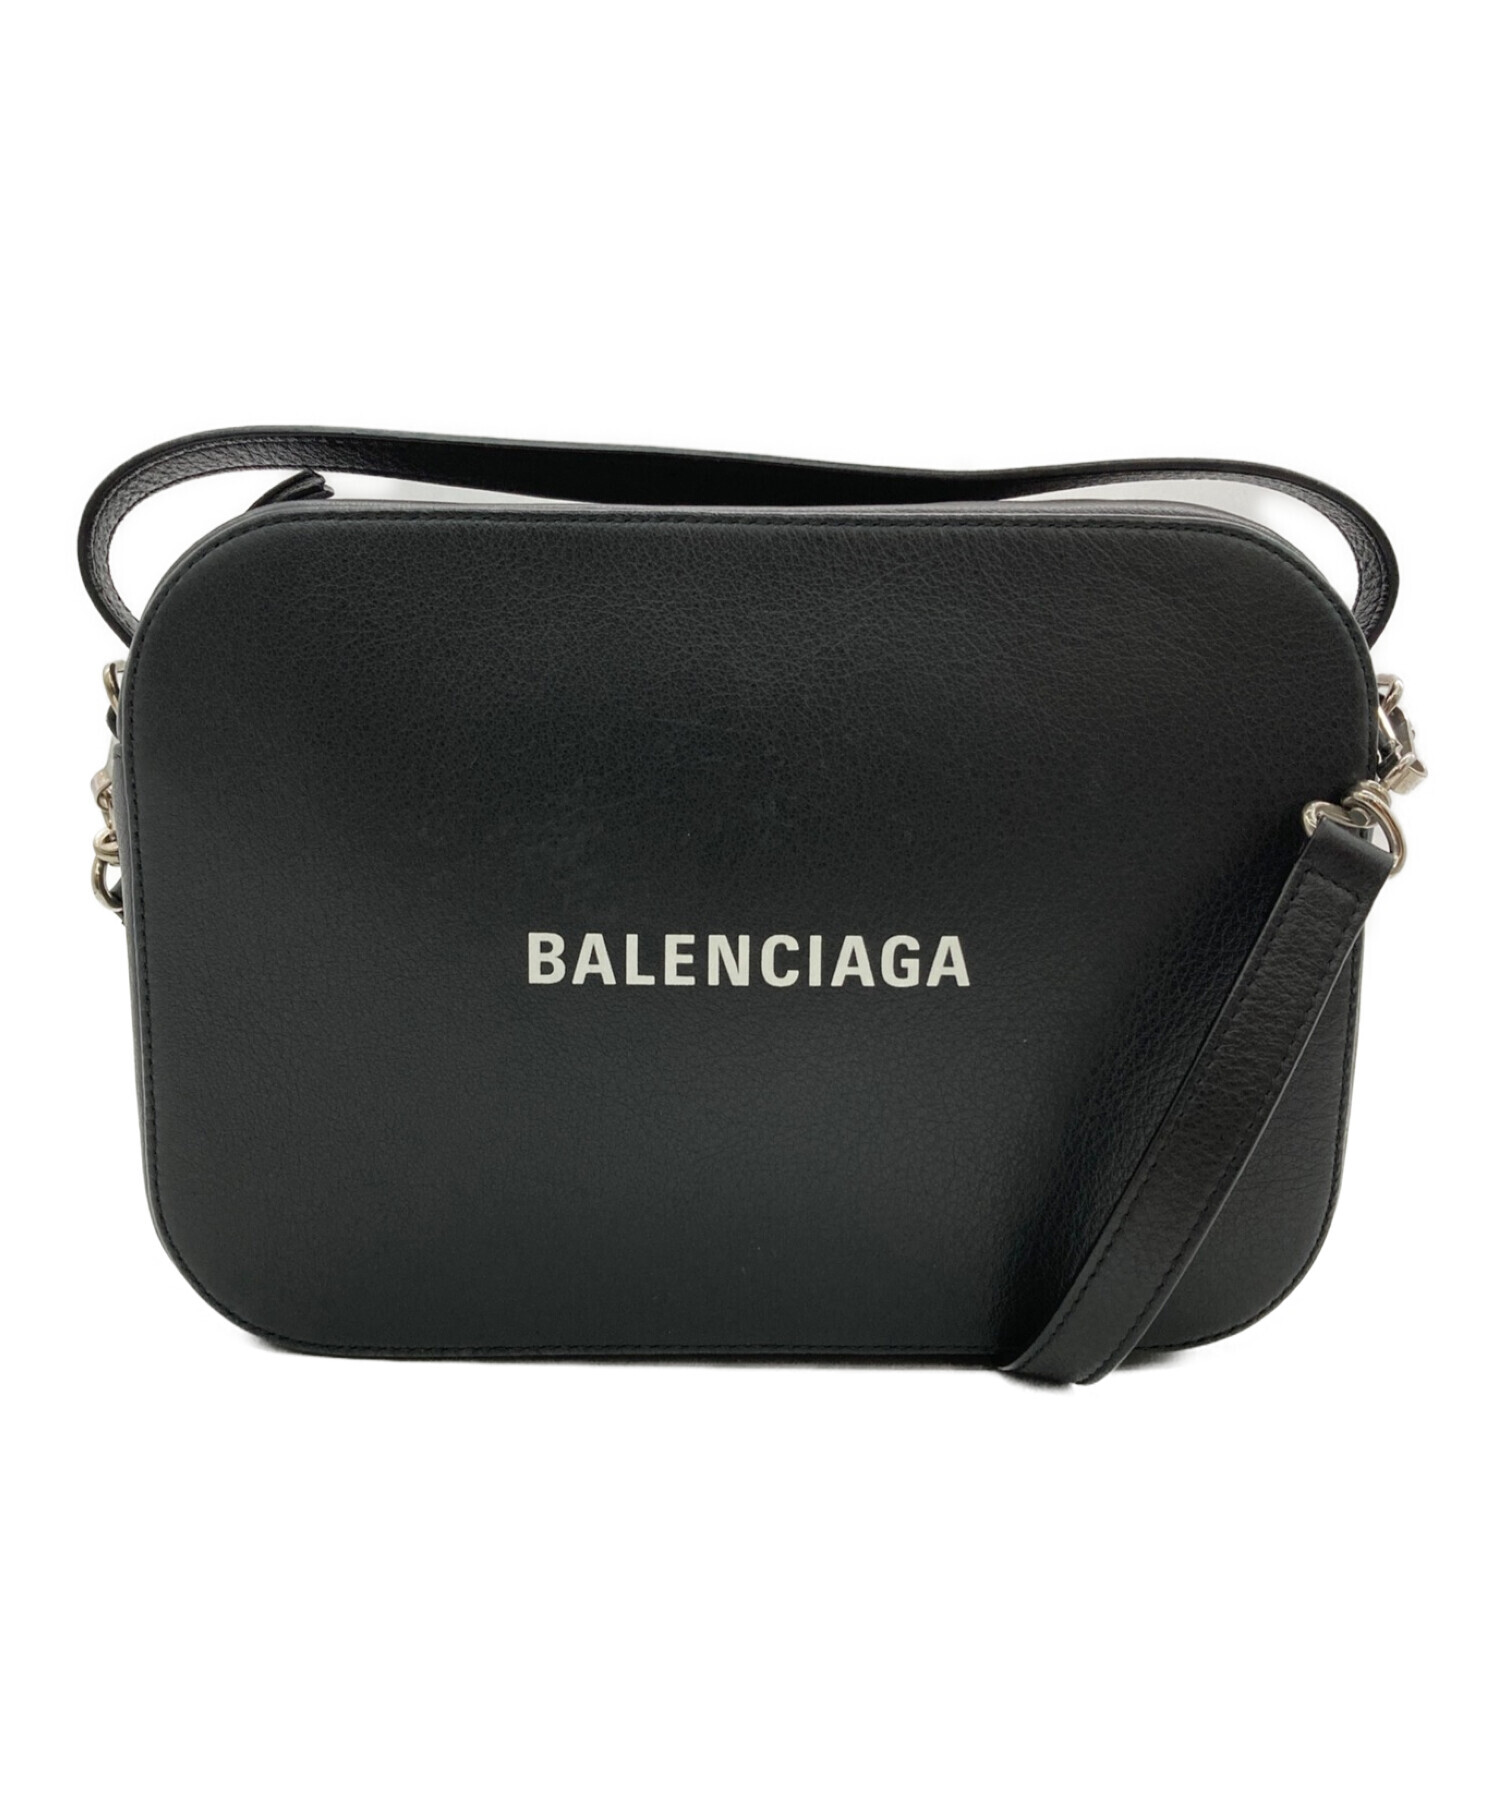 BALENCIAGA (バレンシアガ) EVERYDAY CAMERA BAG S/ショルダーバッグ ブラック